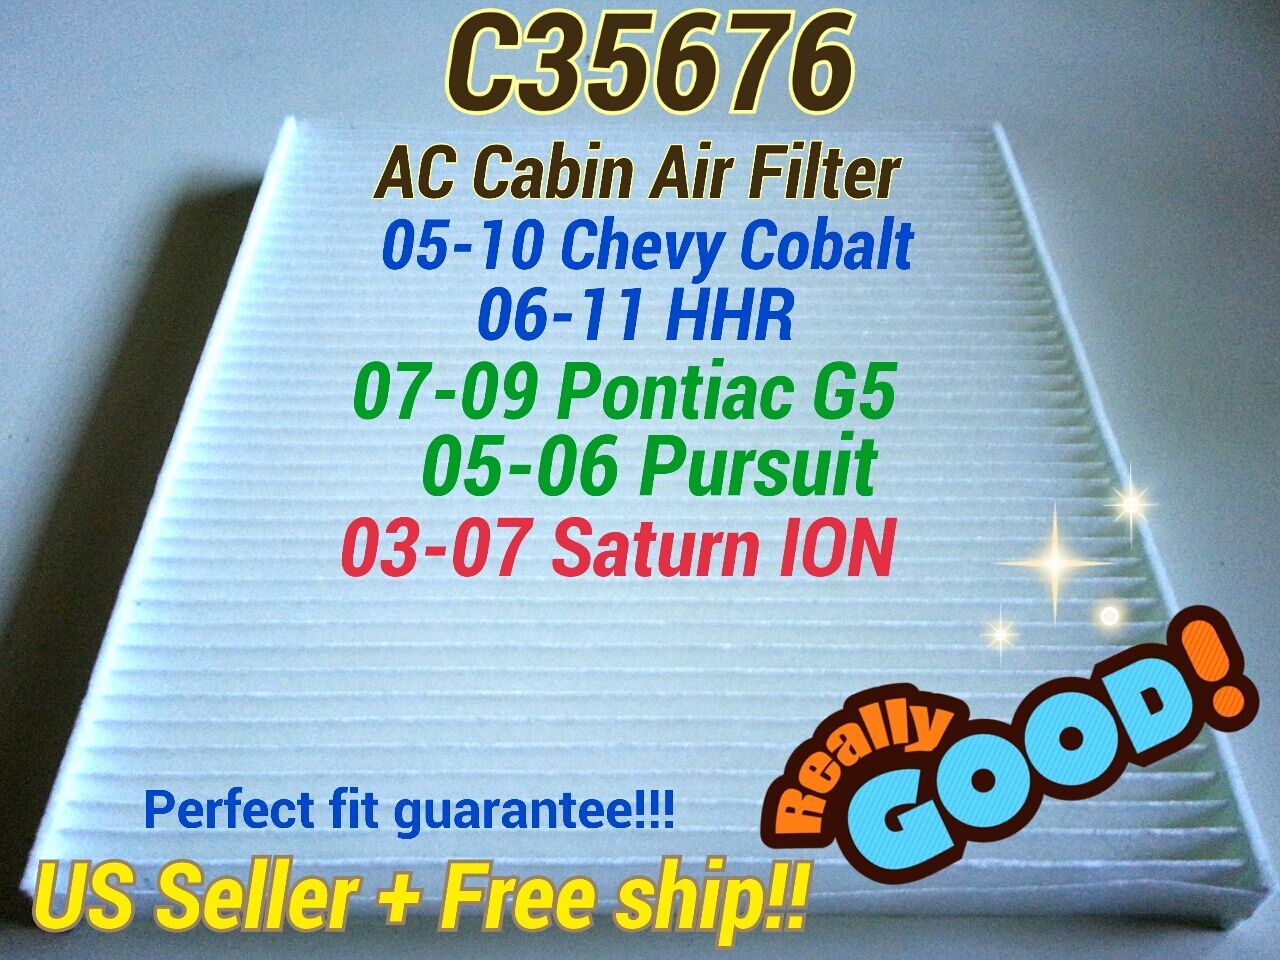 C35676 AC CABIN AIR FILTER for CHEVY COBALT HHR PONTIAC G5 PURSUIT SATURN ION